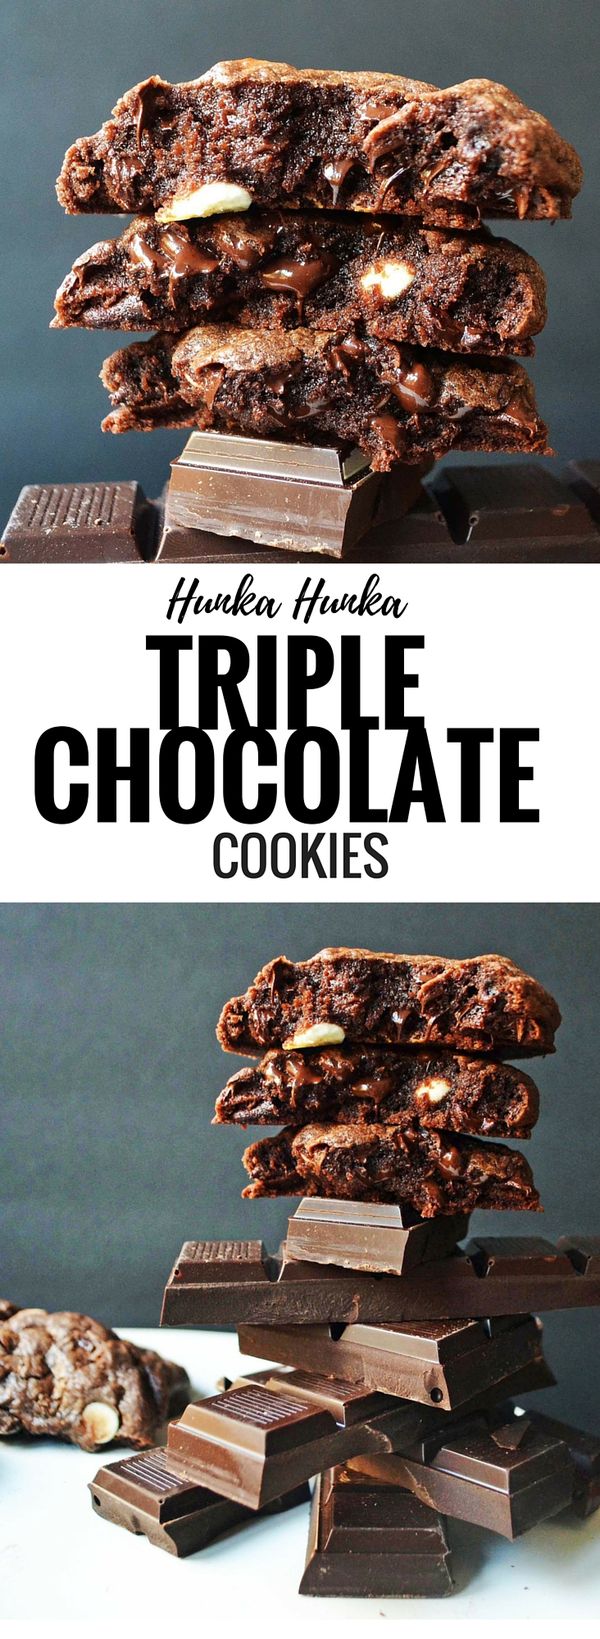 Hunka Hunka Triple Chocolate Cookies